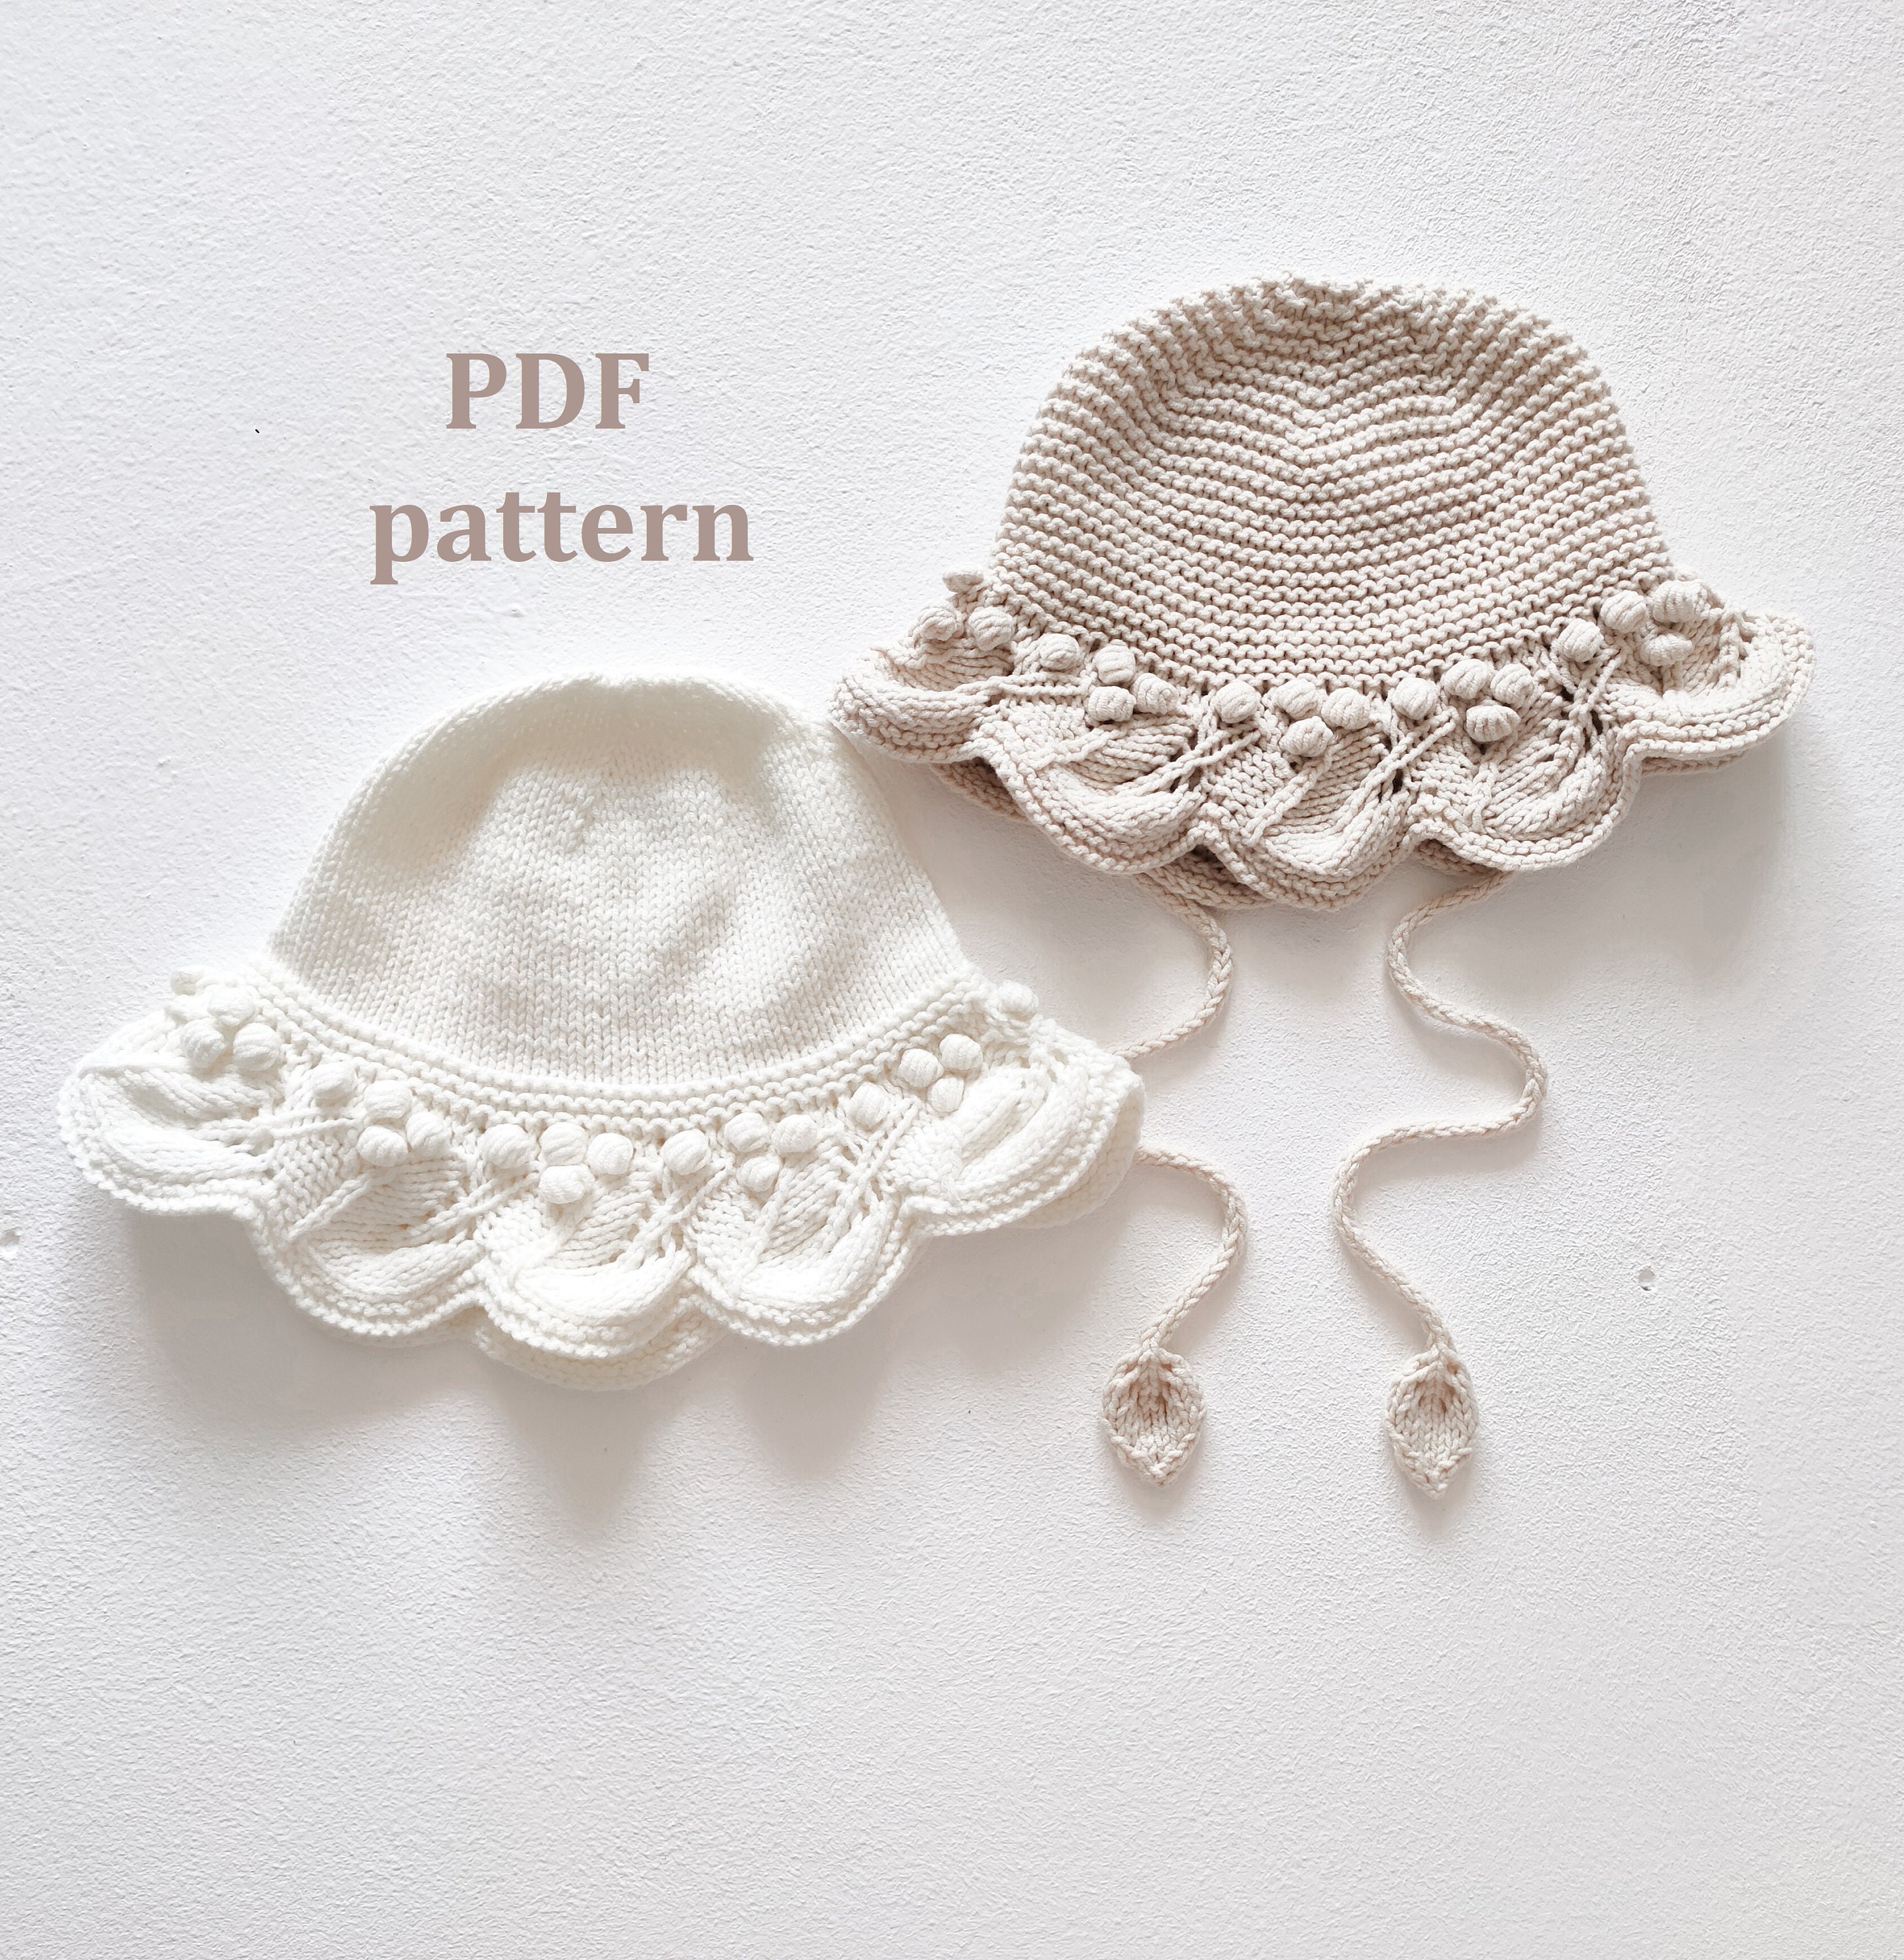 2 in 1, Knitting Patterns Set, Knit Pattern Baby Jumper, Knit Pattern Baby  Hat, Knit Baby Sweater, Todler, Newborn Knit Pattern 